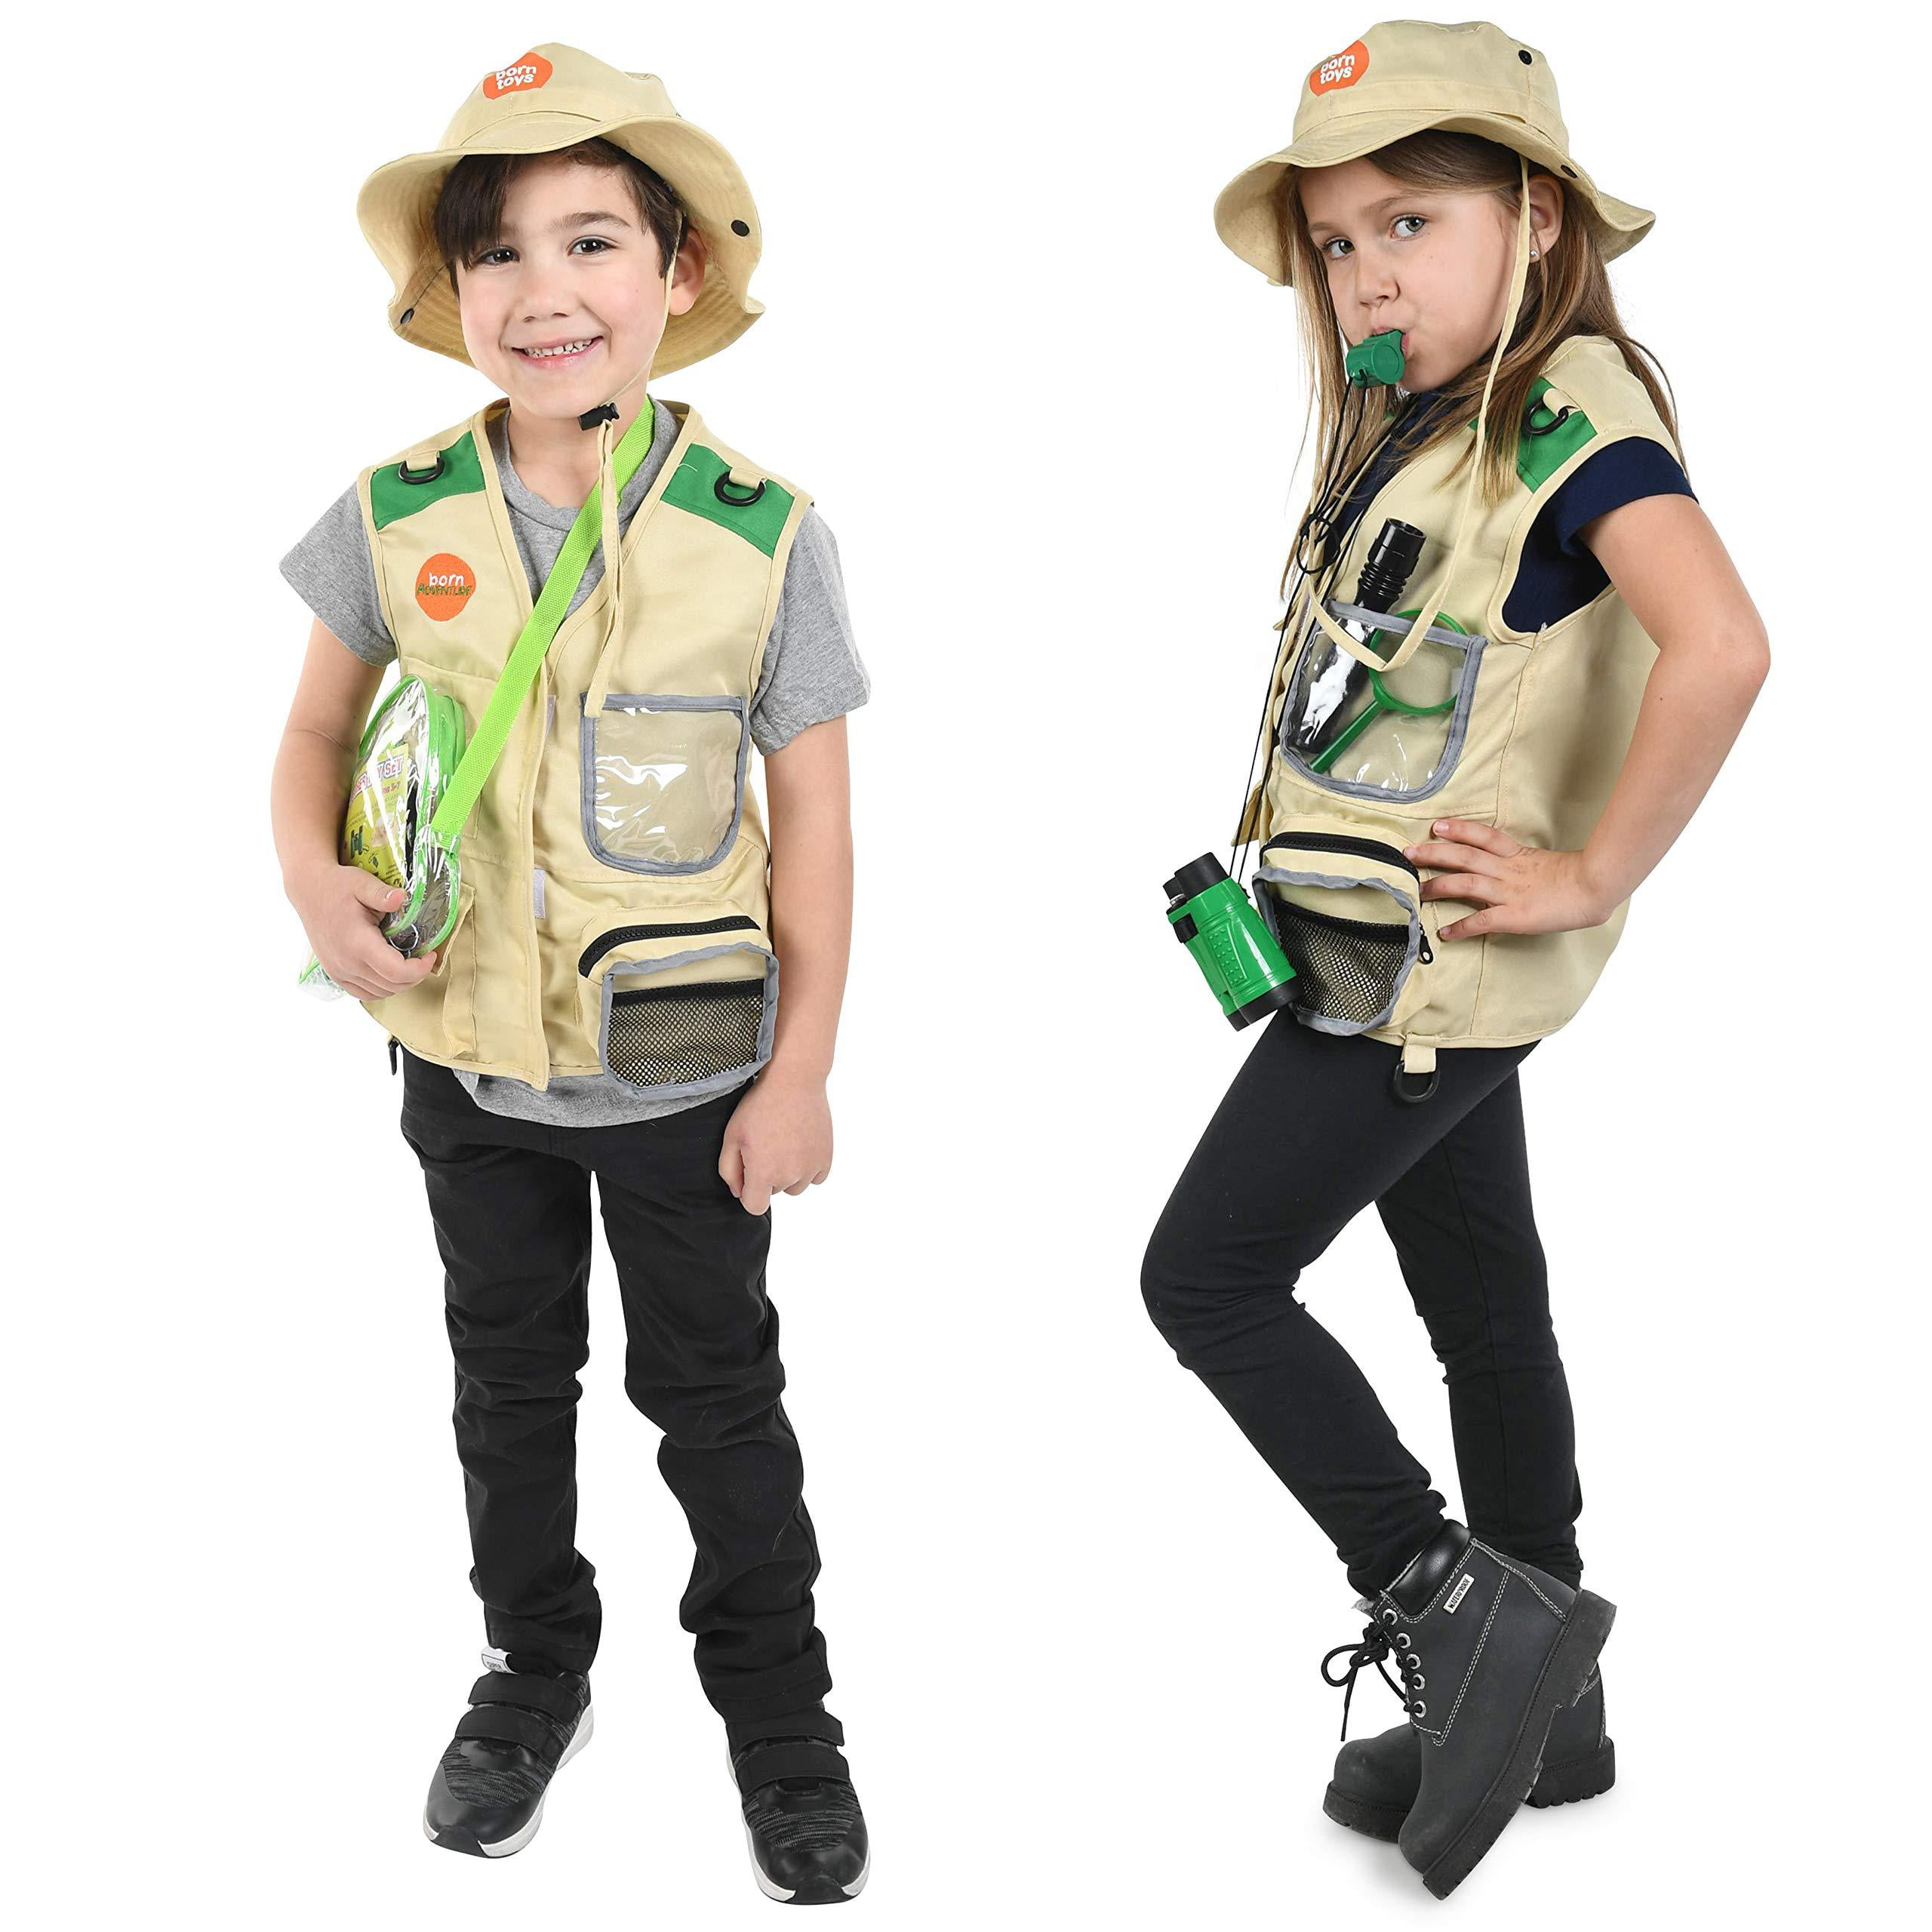 vest,birthday gifts fishing vest adventure kits, dress up costume